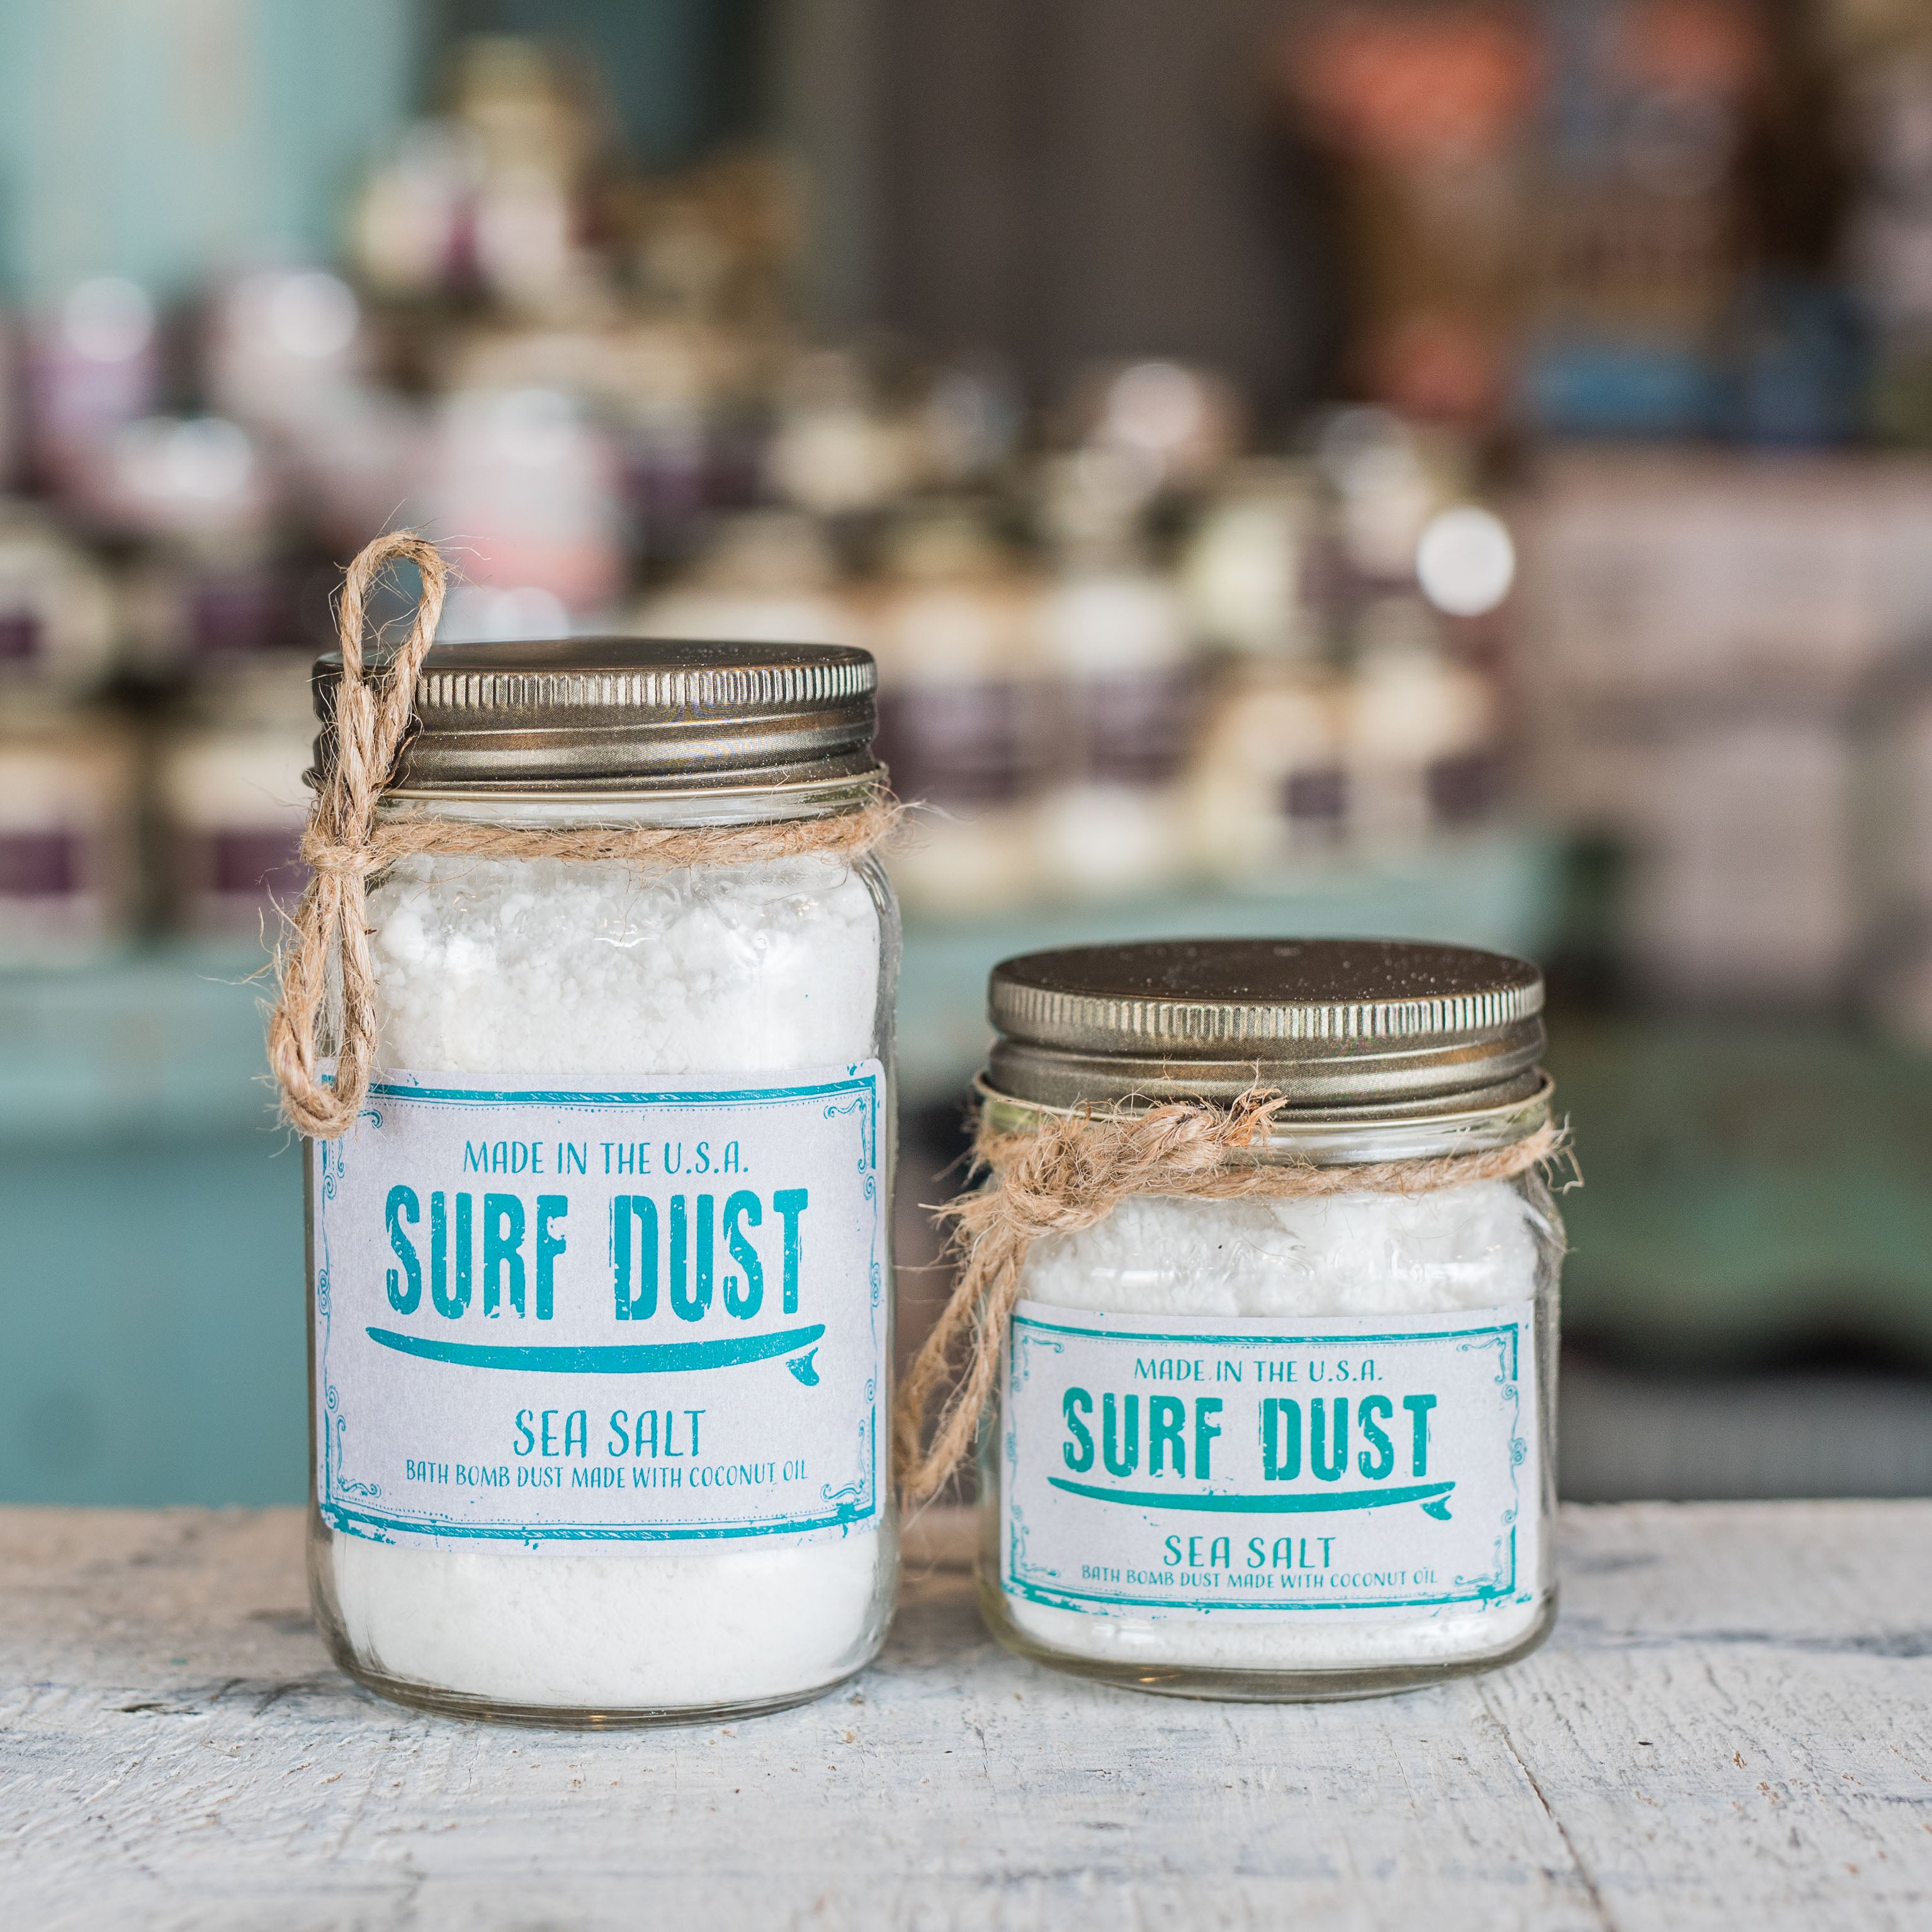 sea salt Surf Dust Bath bomb in a jar